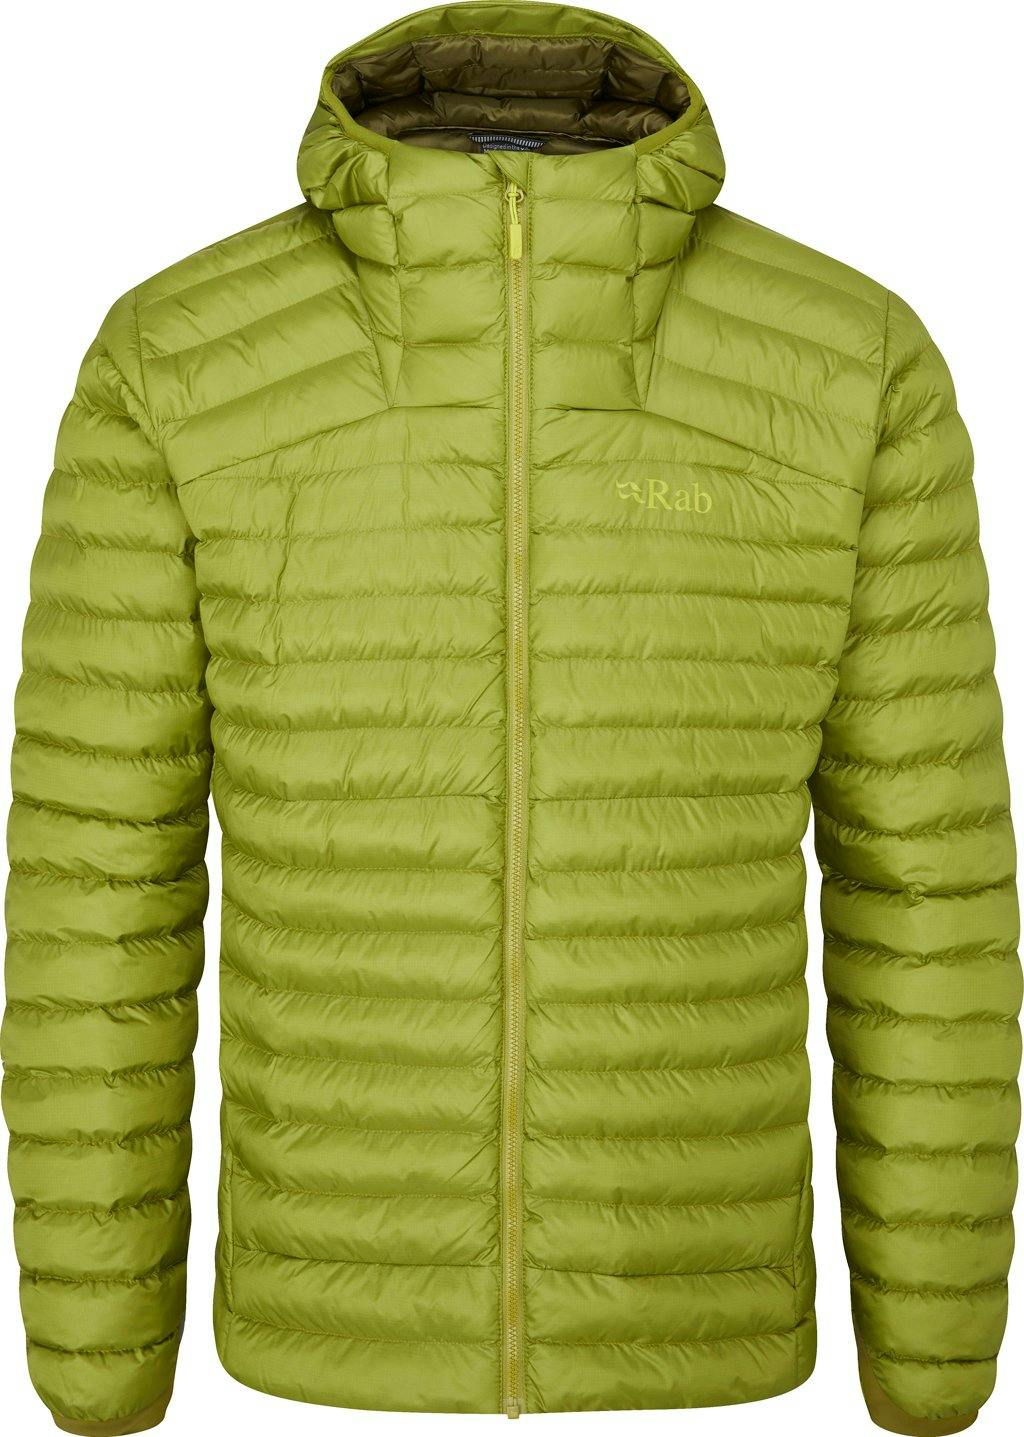 Product image for Cirrus Alpine Jacket - Men's